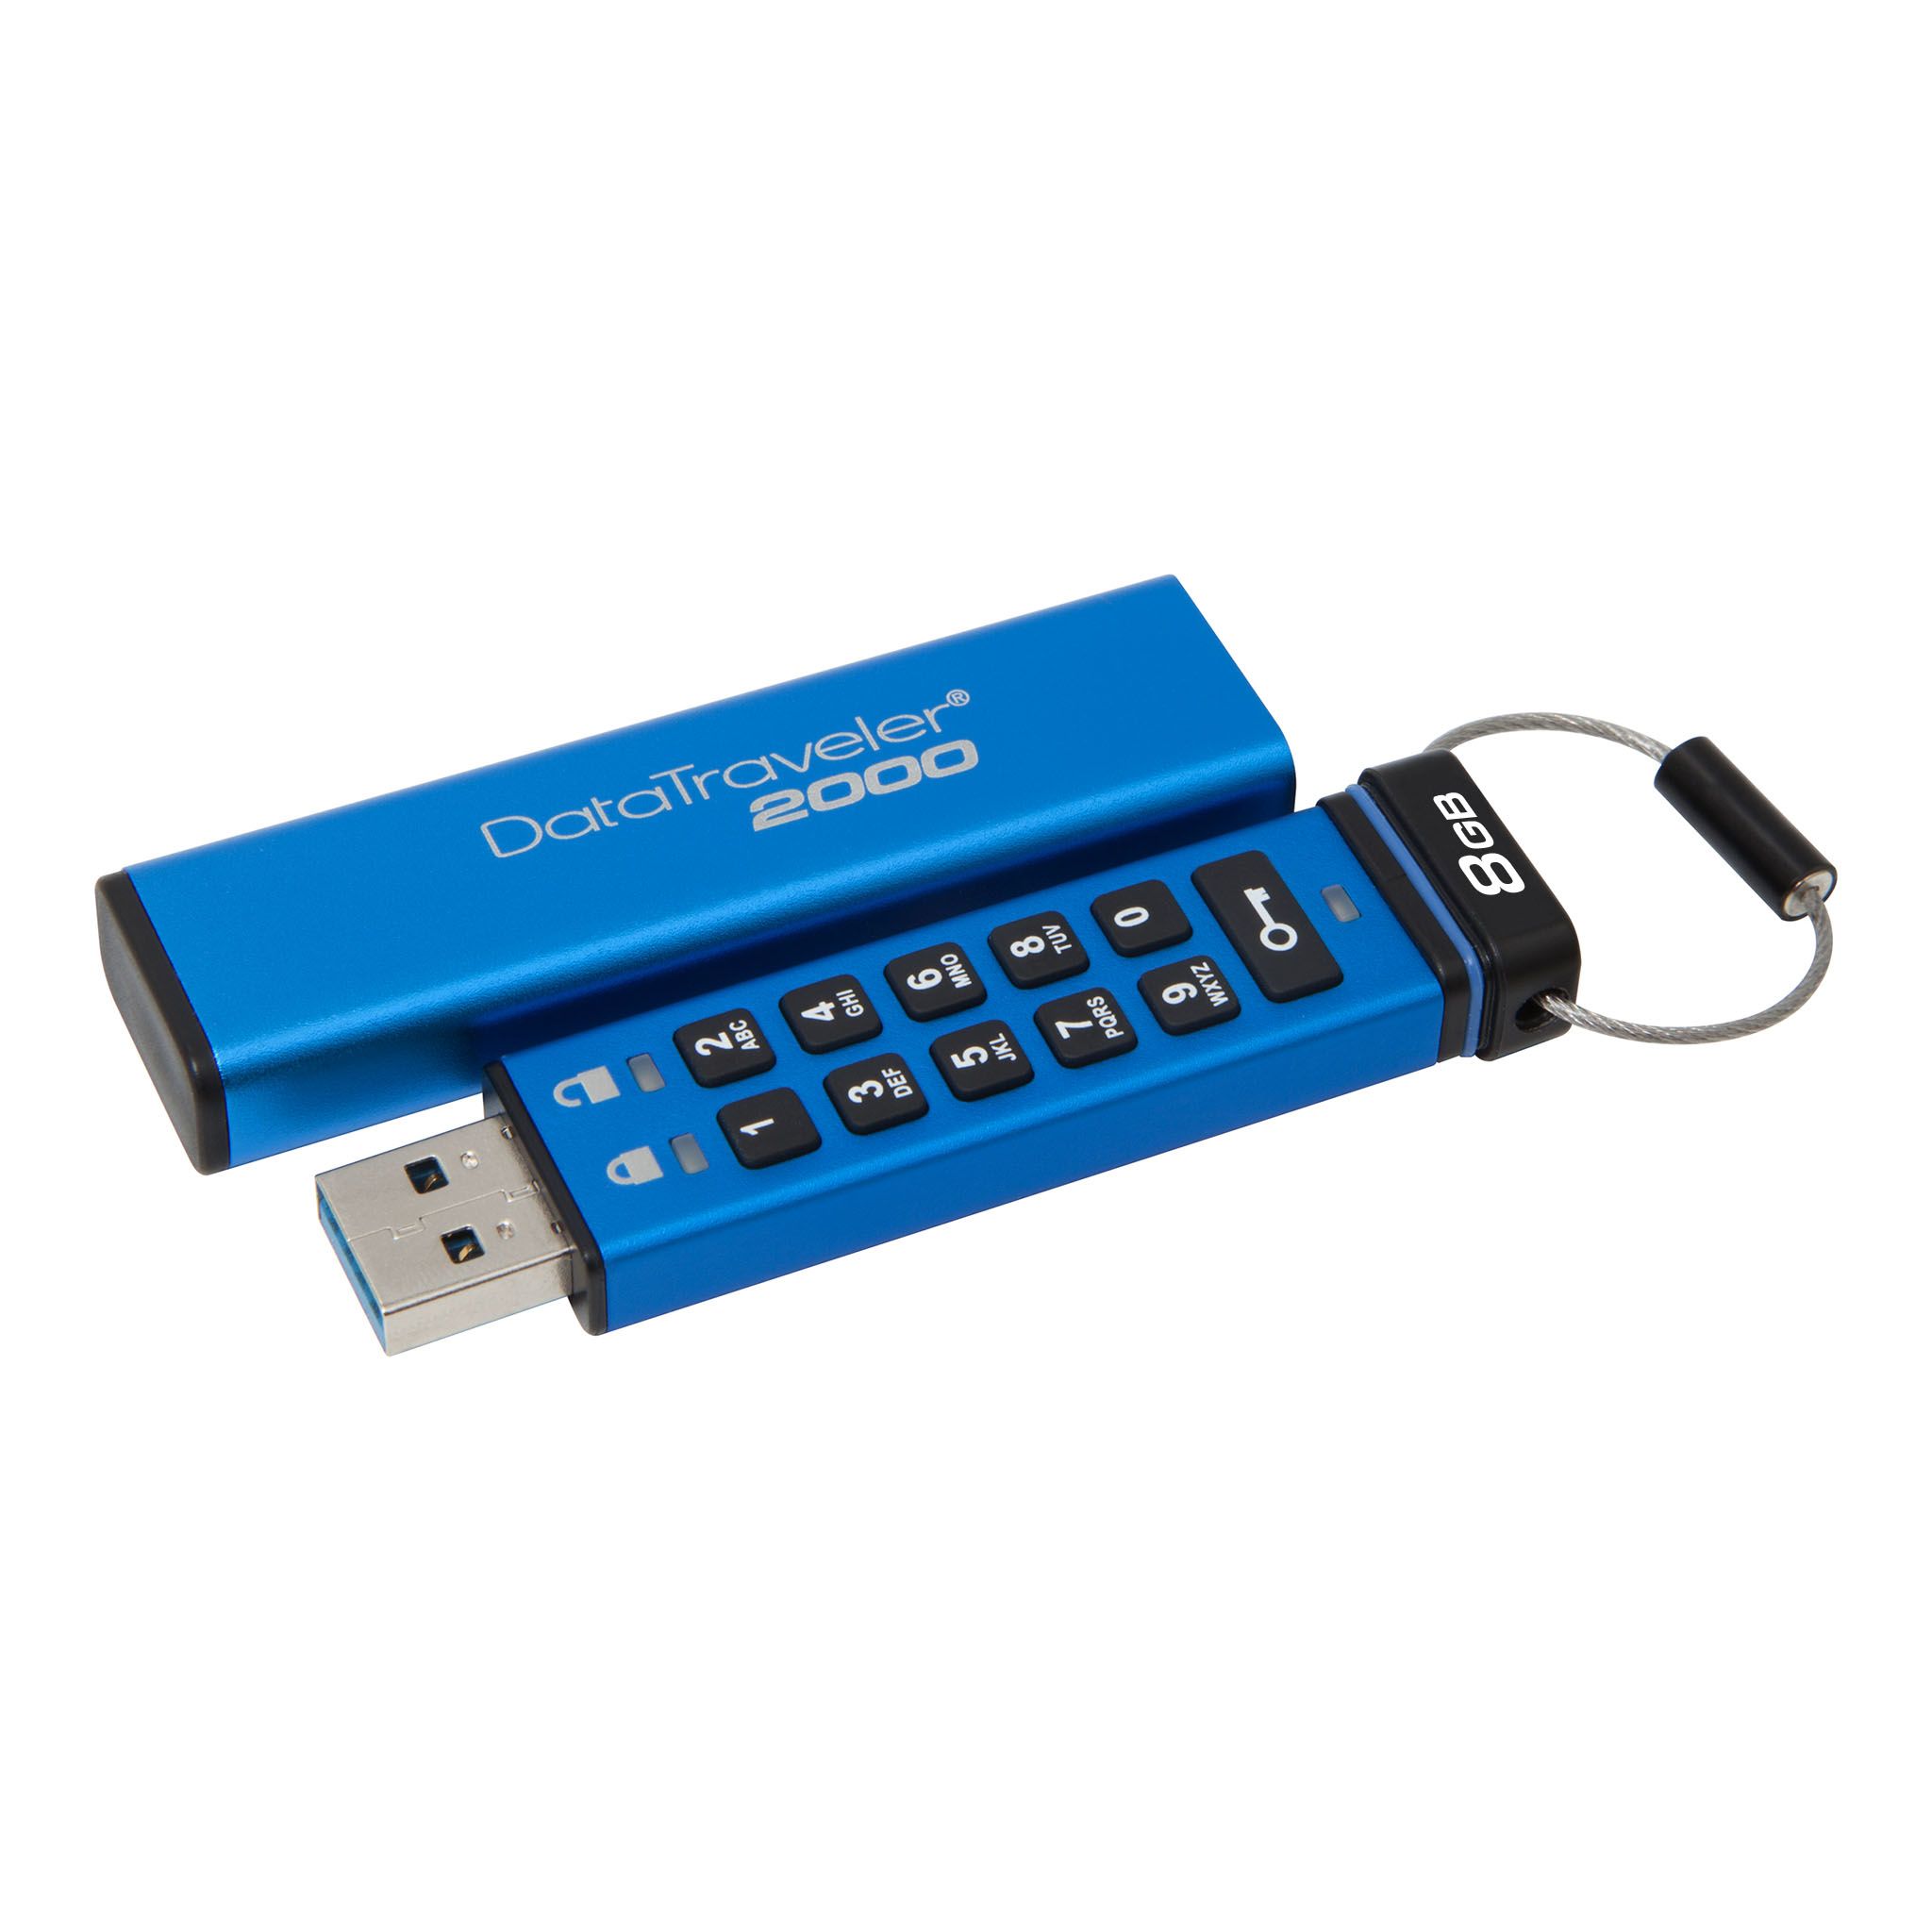 DataTraveler 2000 USB Flash Drive with Alphanumeric Keypad 